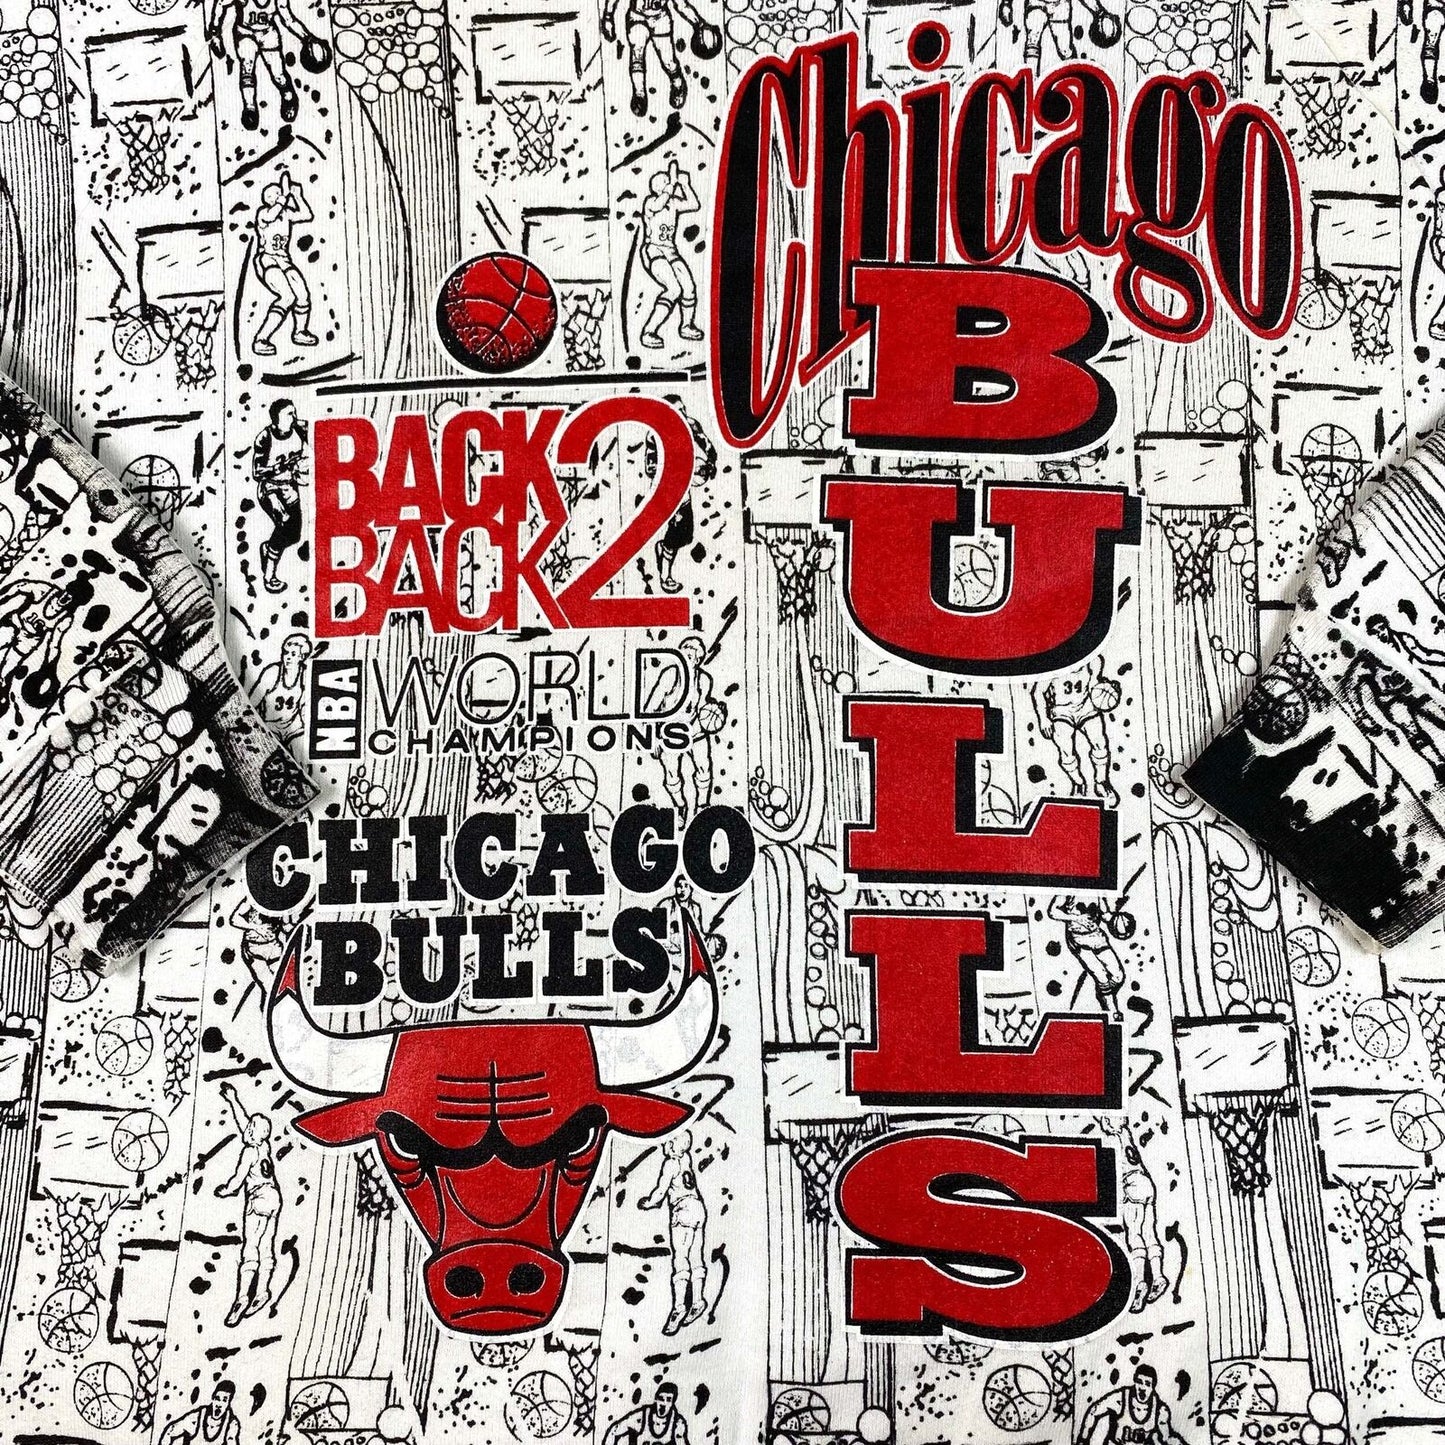 Chicago Bulls 1992 Championship All Over Print Sweatshirt